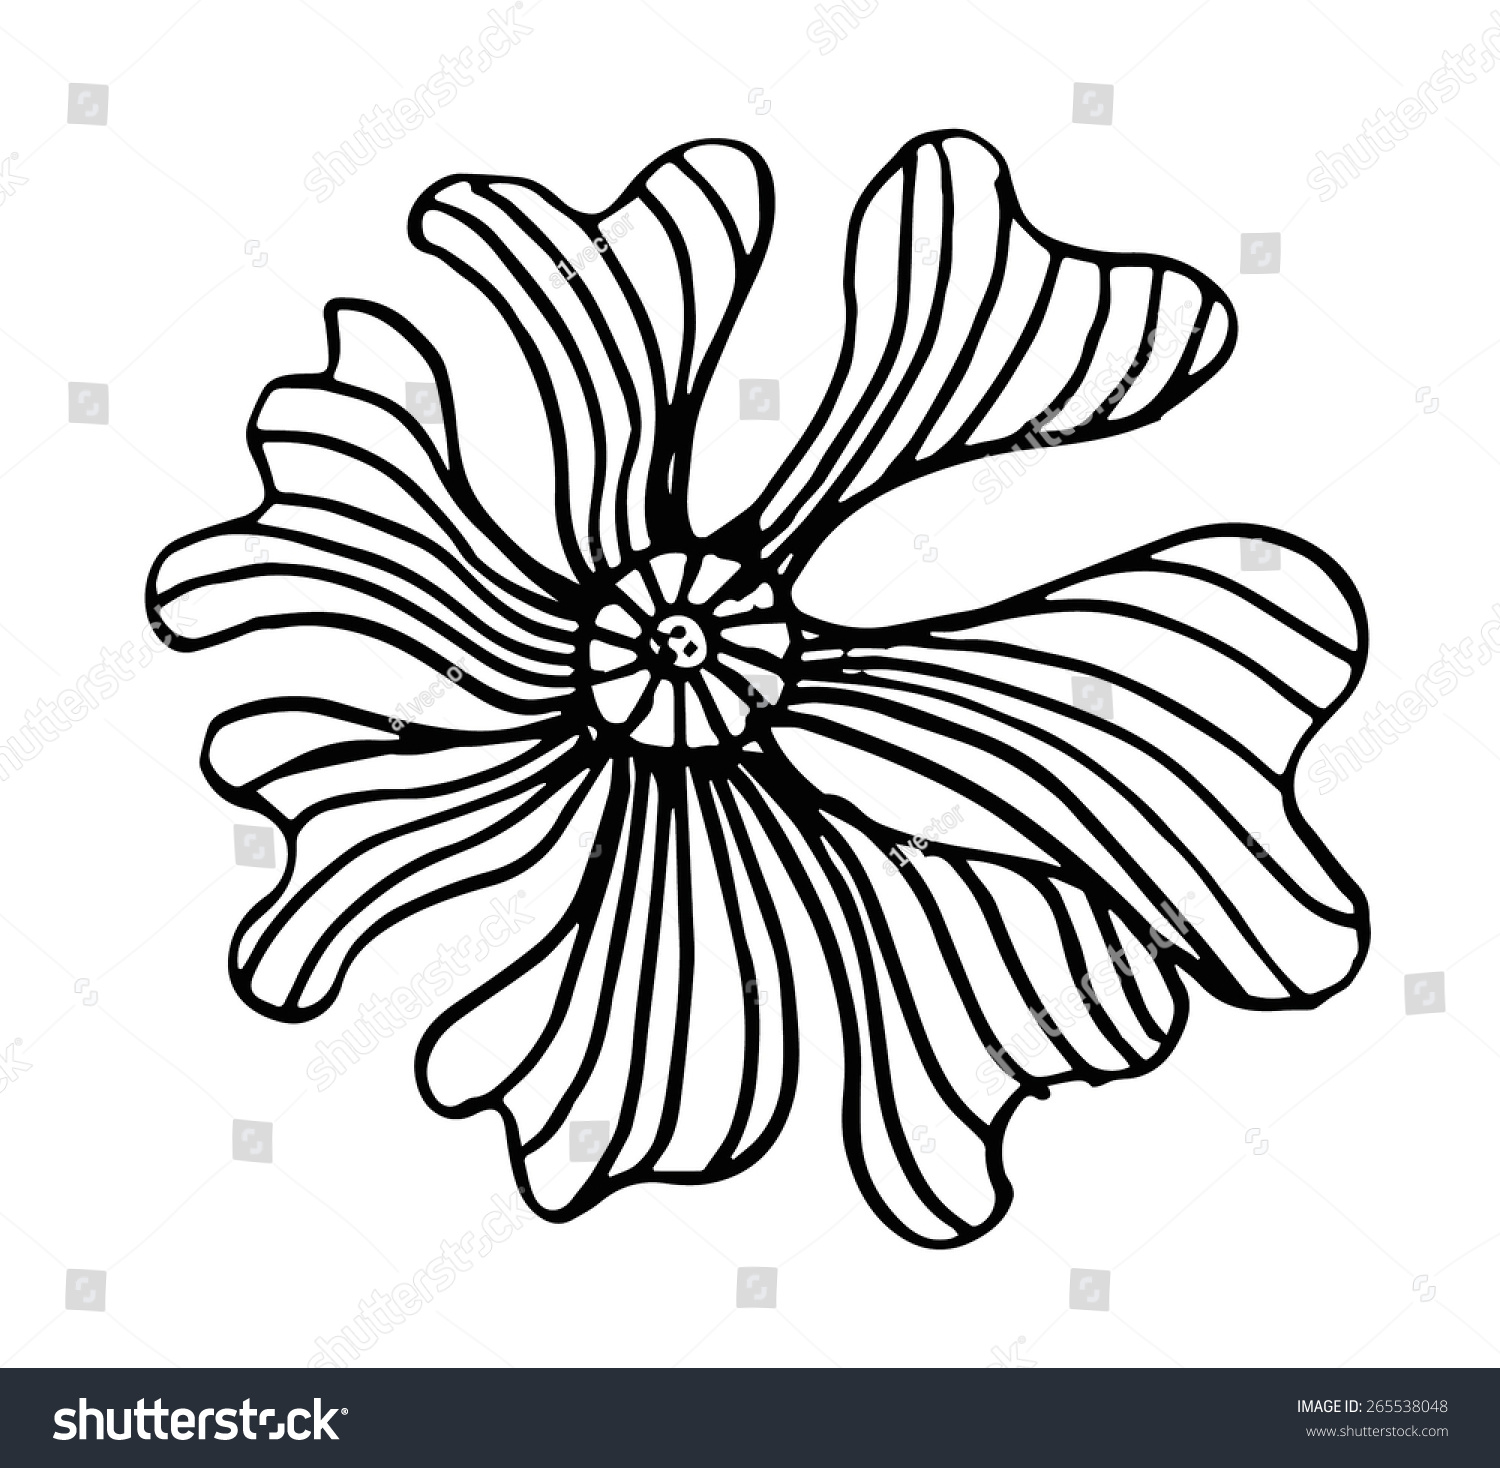 Zentangle Flower Vector Art - 265538048 : Shutterstock